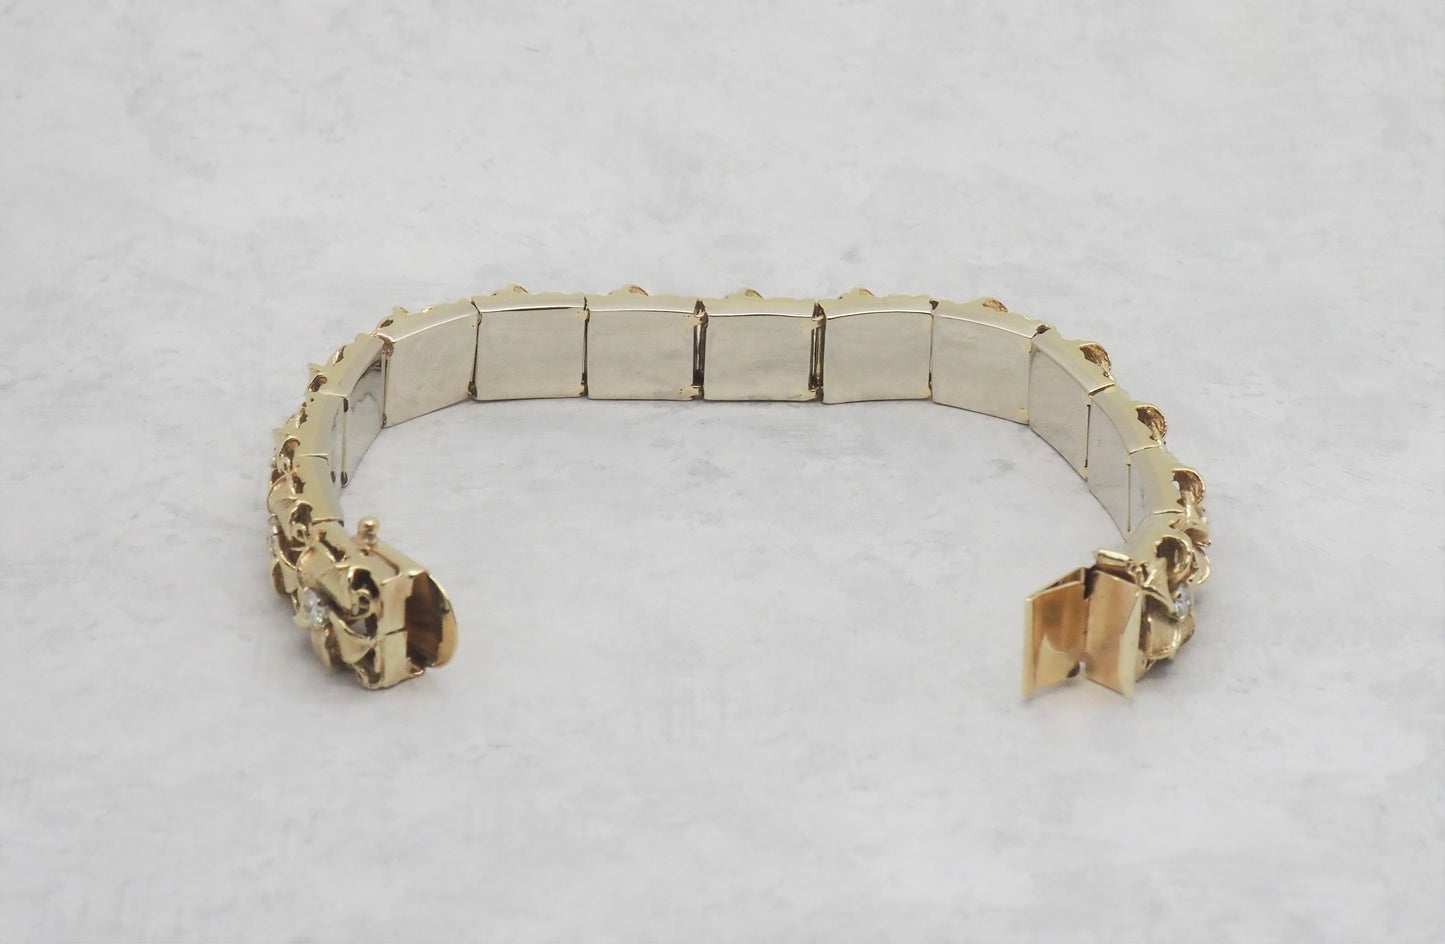 Vintage 14k Yellow Gold Diamond Flower Bracelet, 7.5 Inches - 70.0g